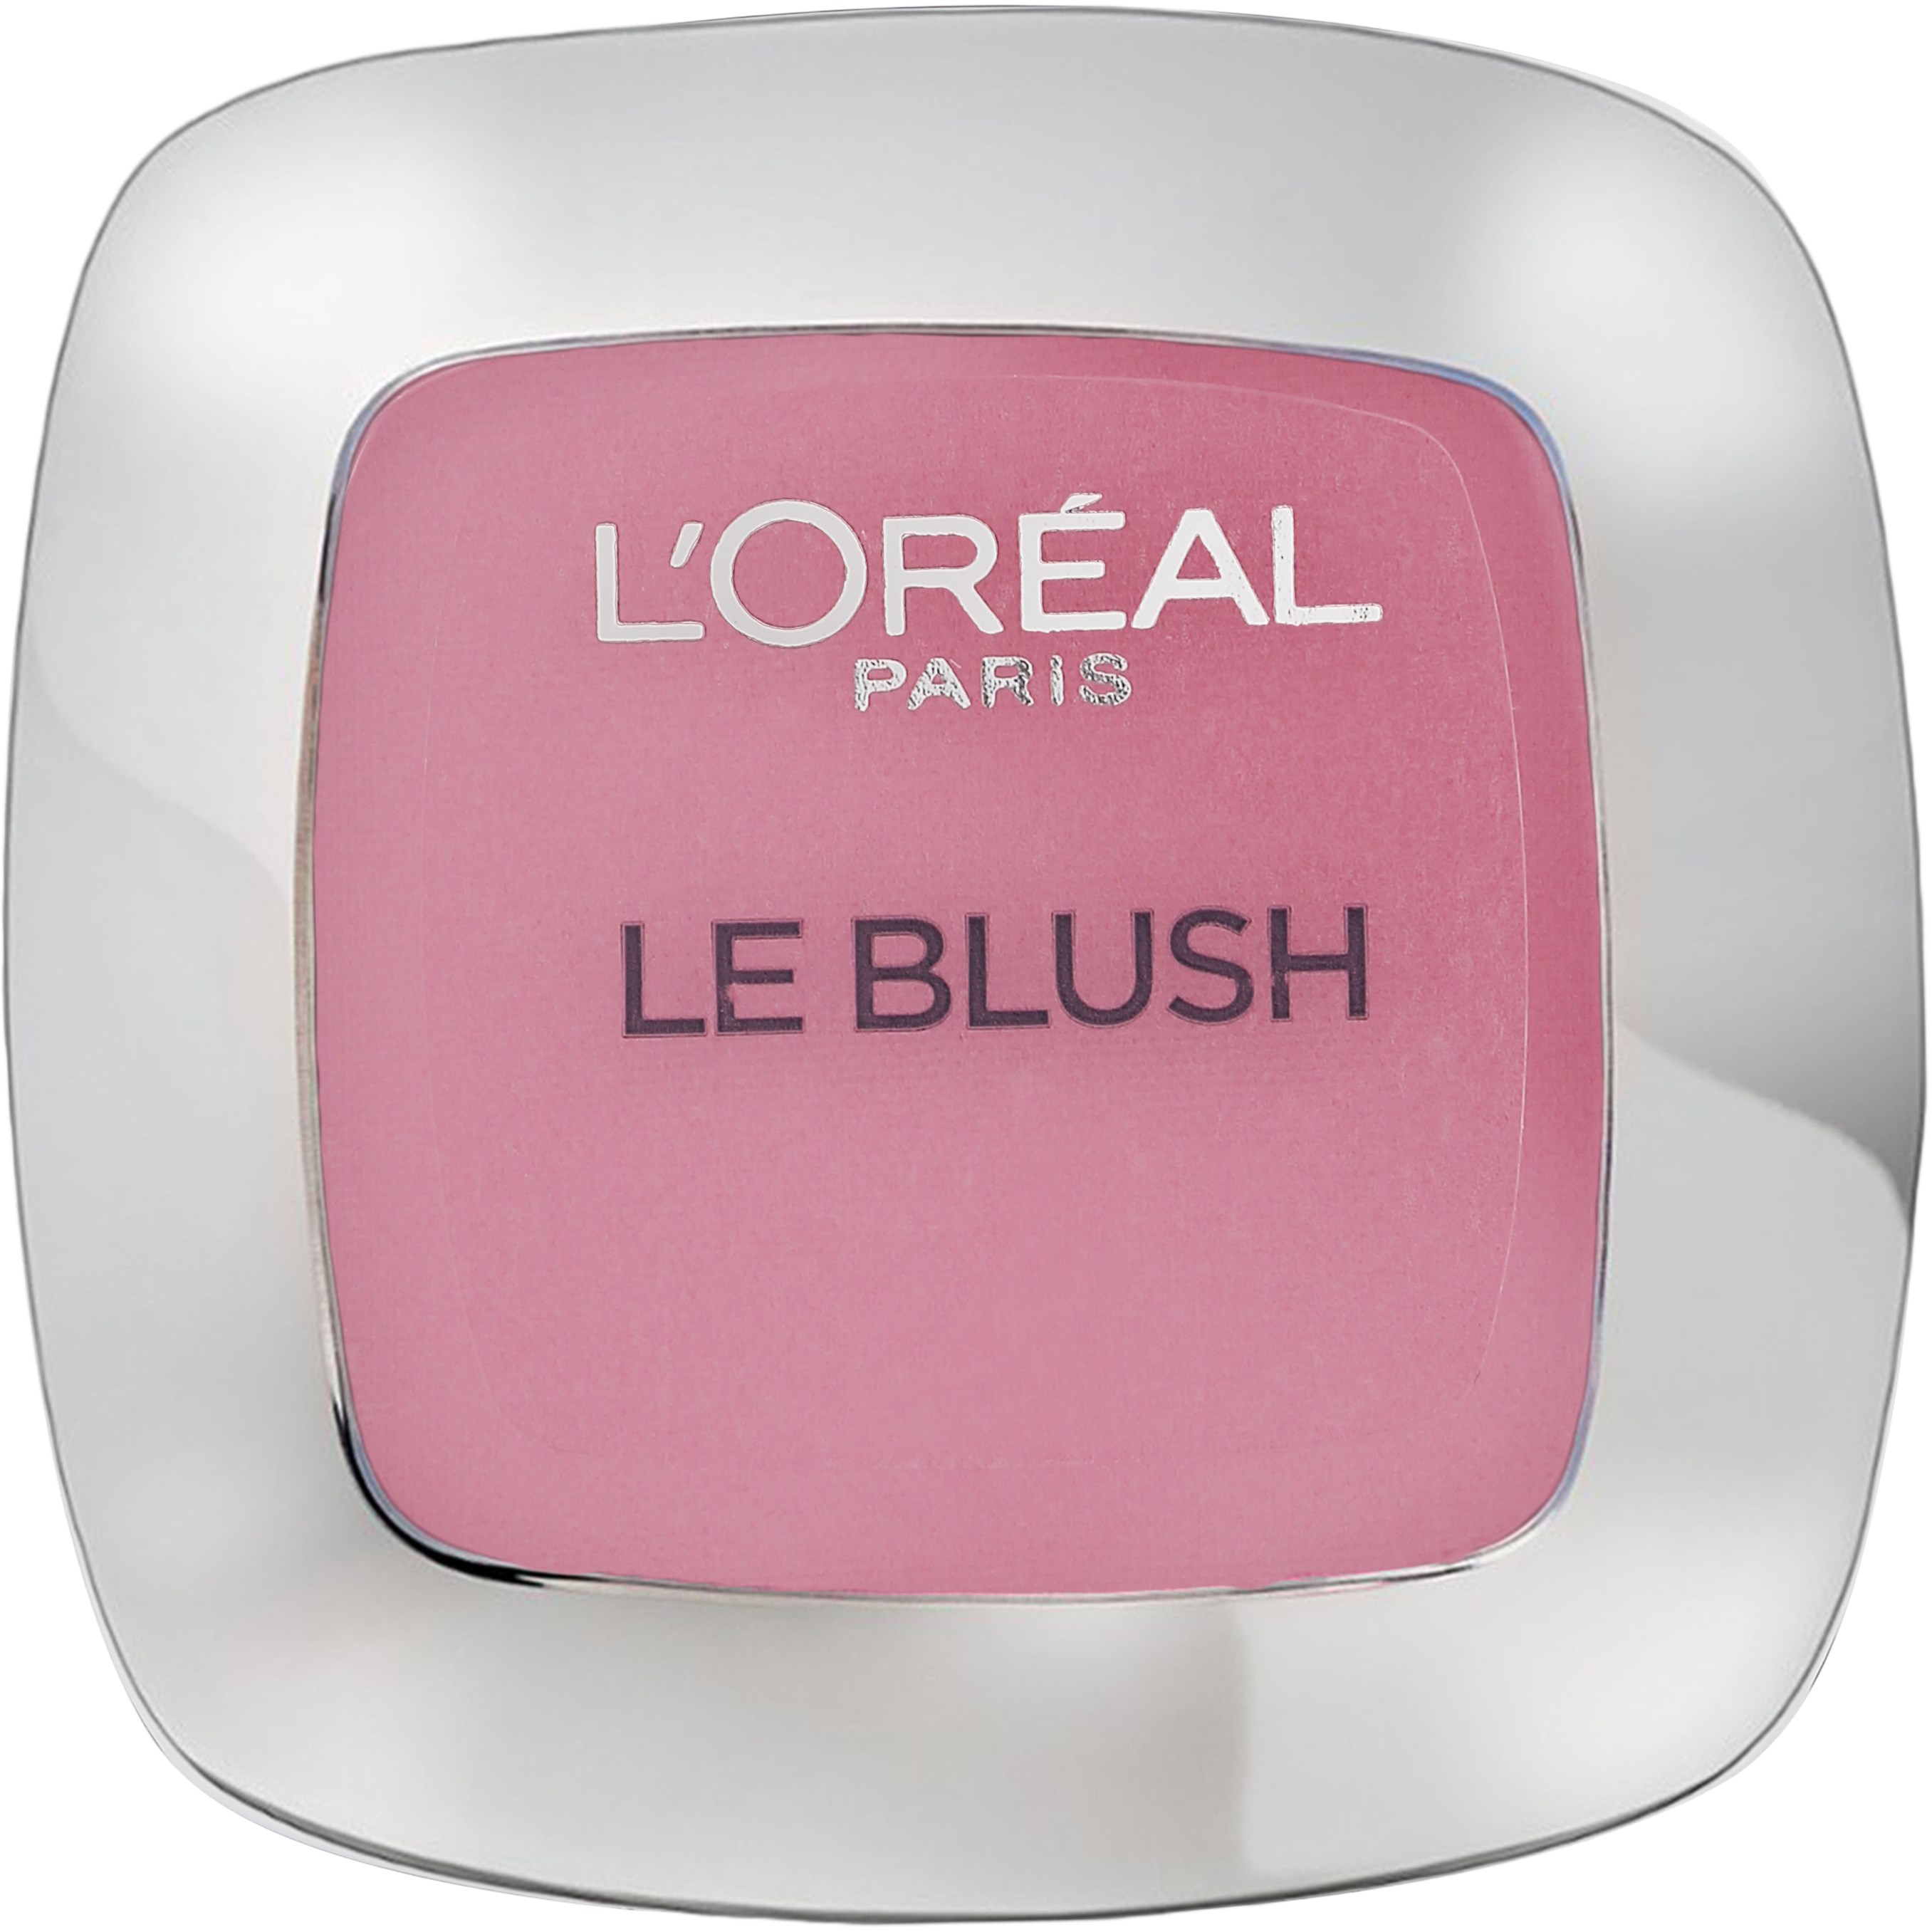 Loreal True Match Le Blush - 165 Rosy Cheeks